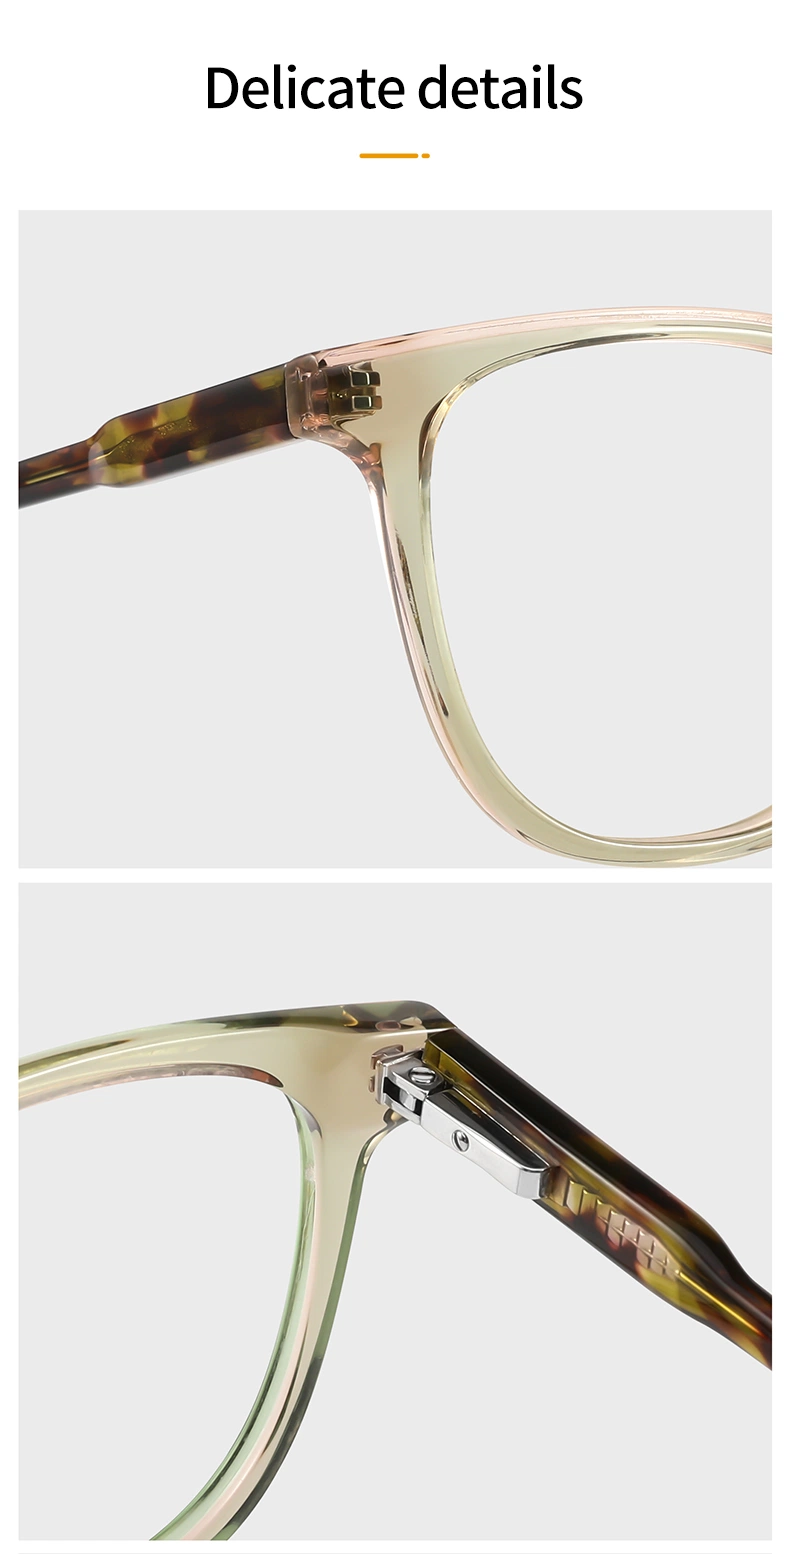 Latest Vintage Acetate Eyewear Montura Acetato Optical Spectacle Eyeglass Frames for Men